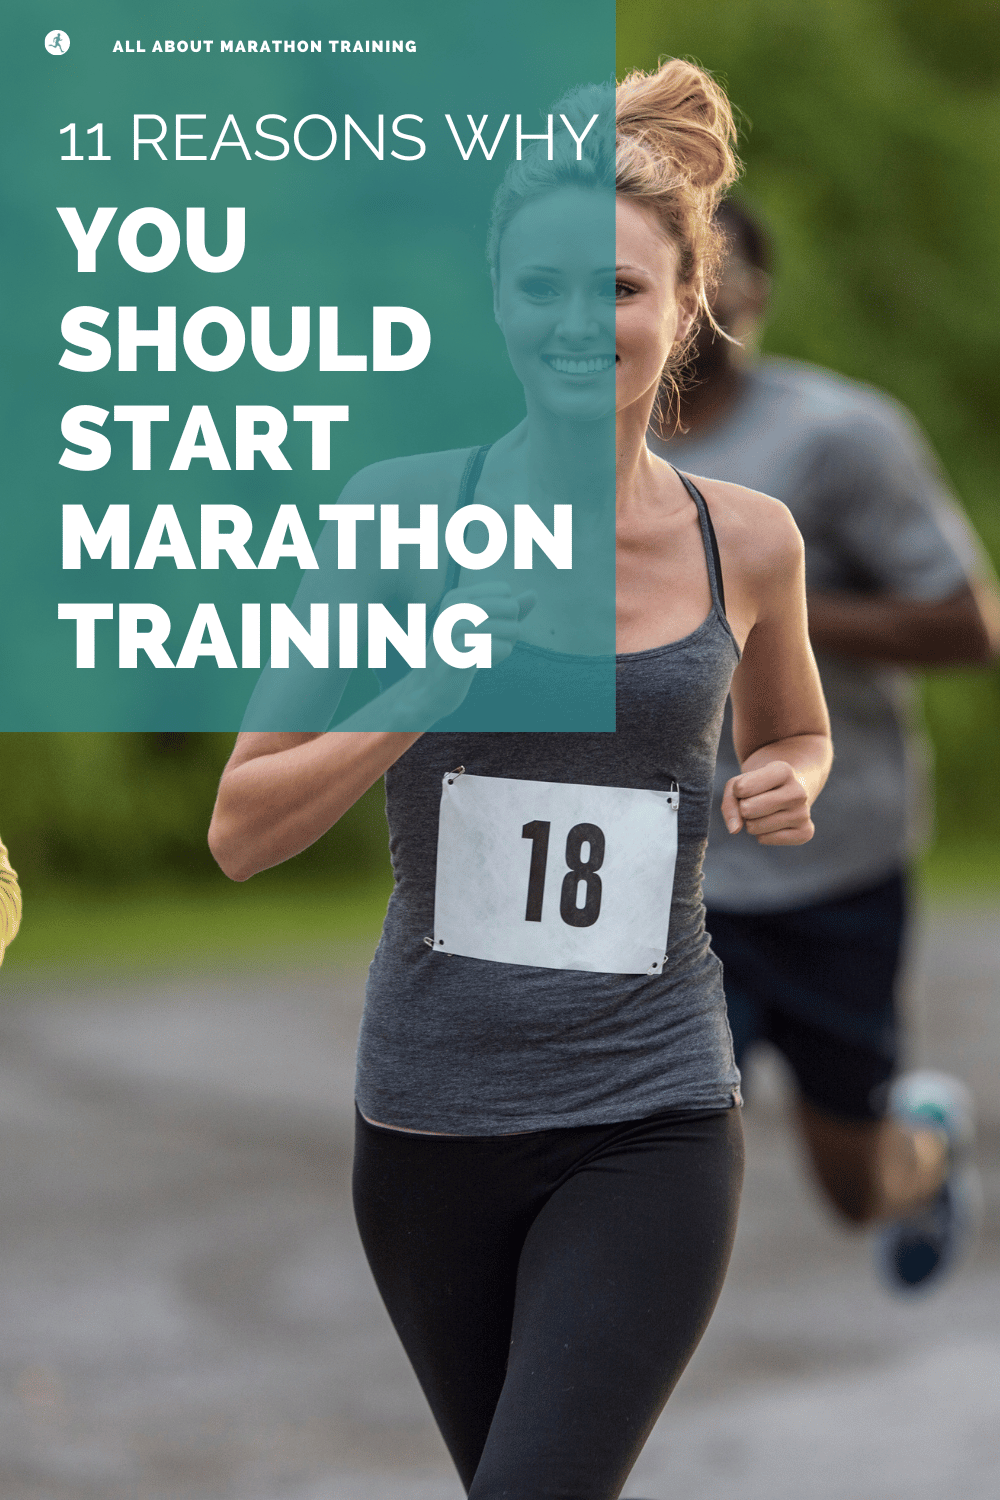 Reasons Why You Should Marathon Train